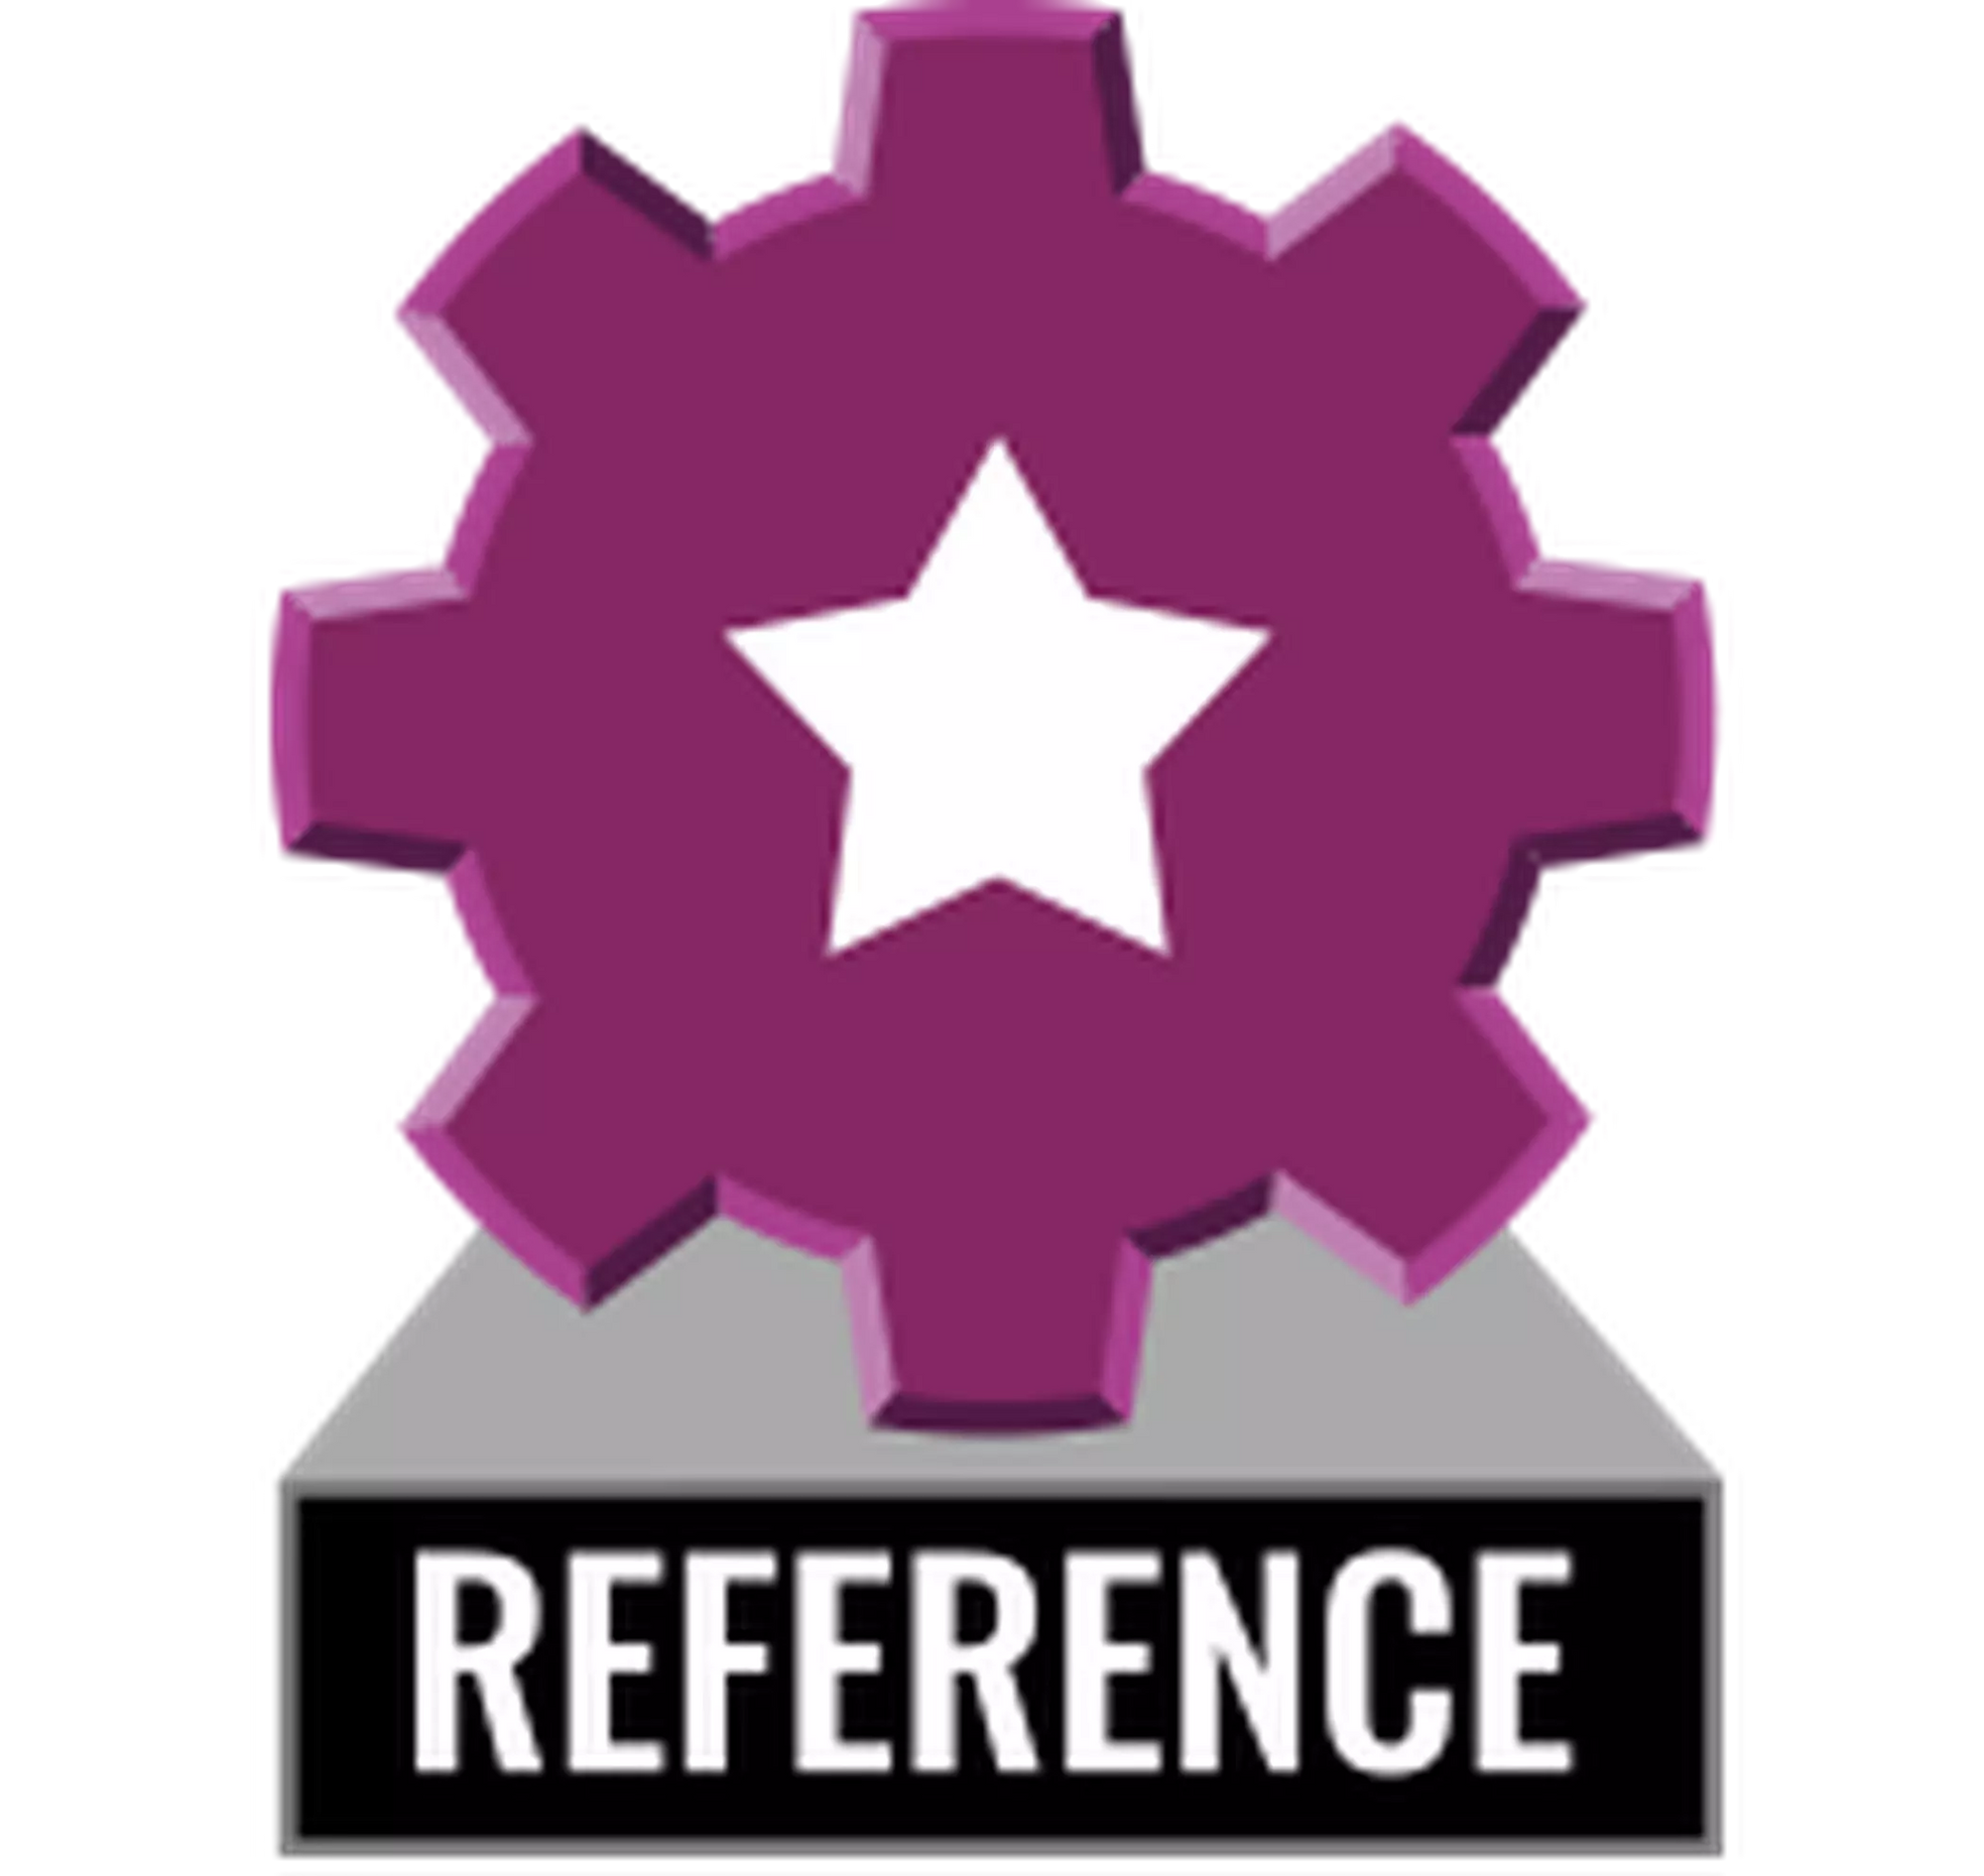 Reference Award Banner